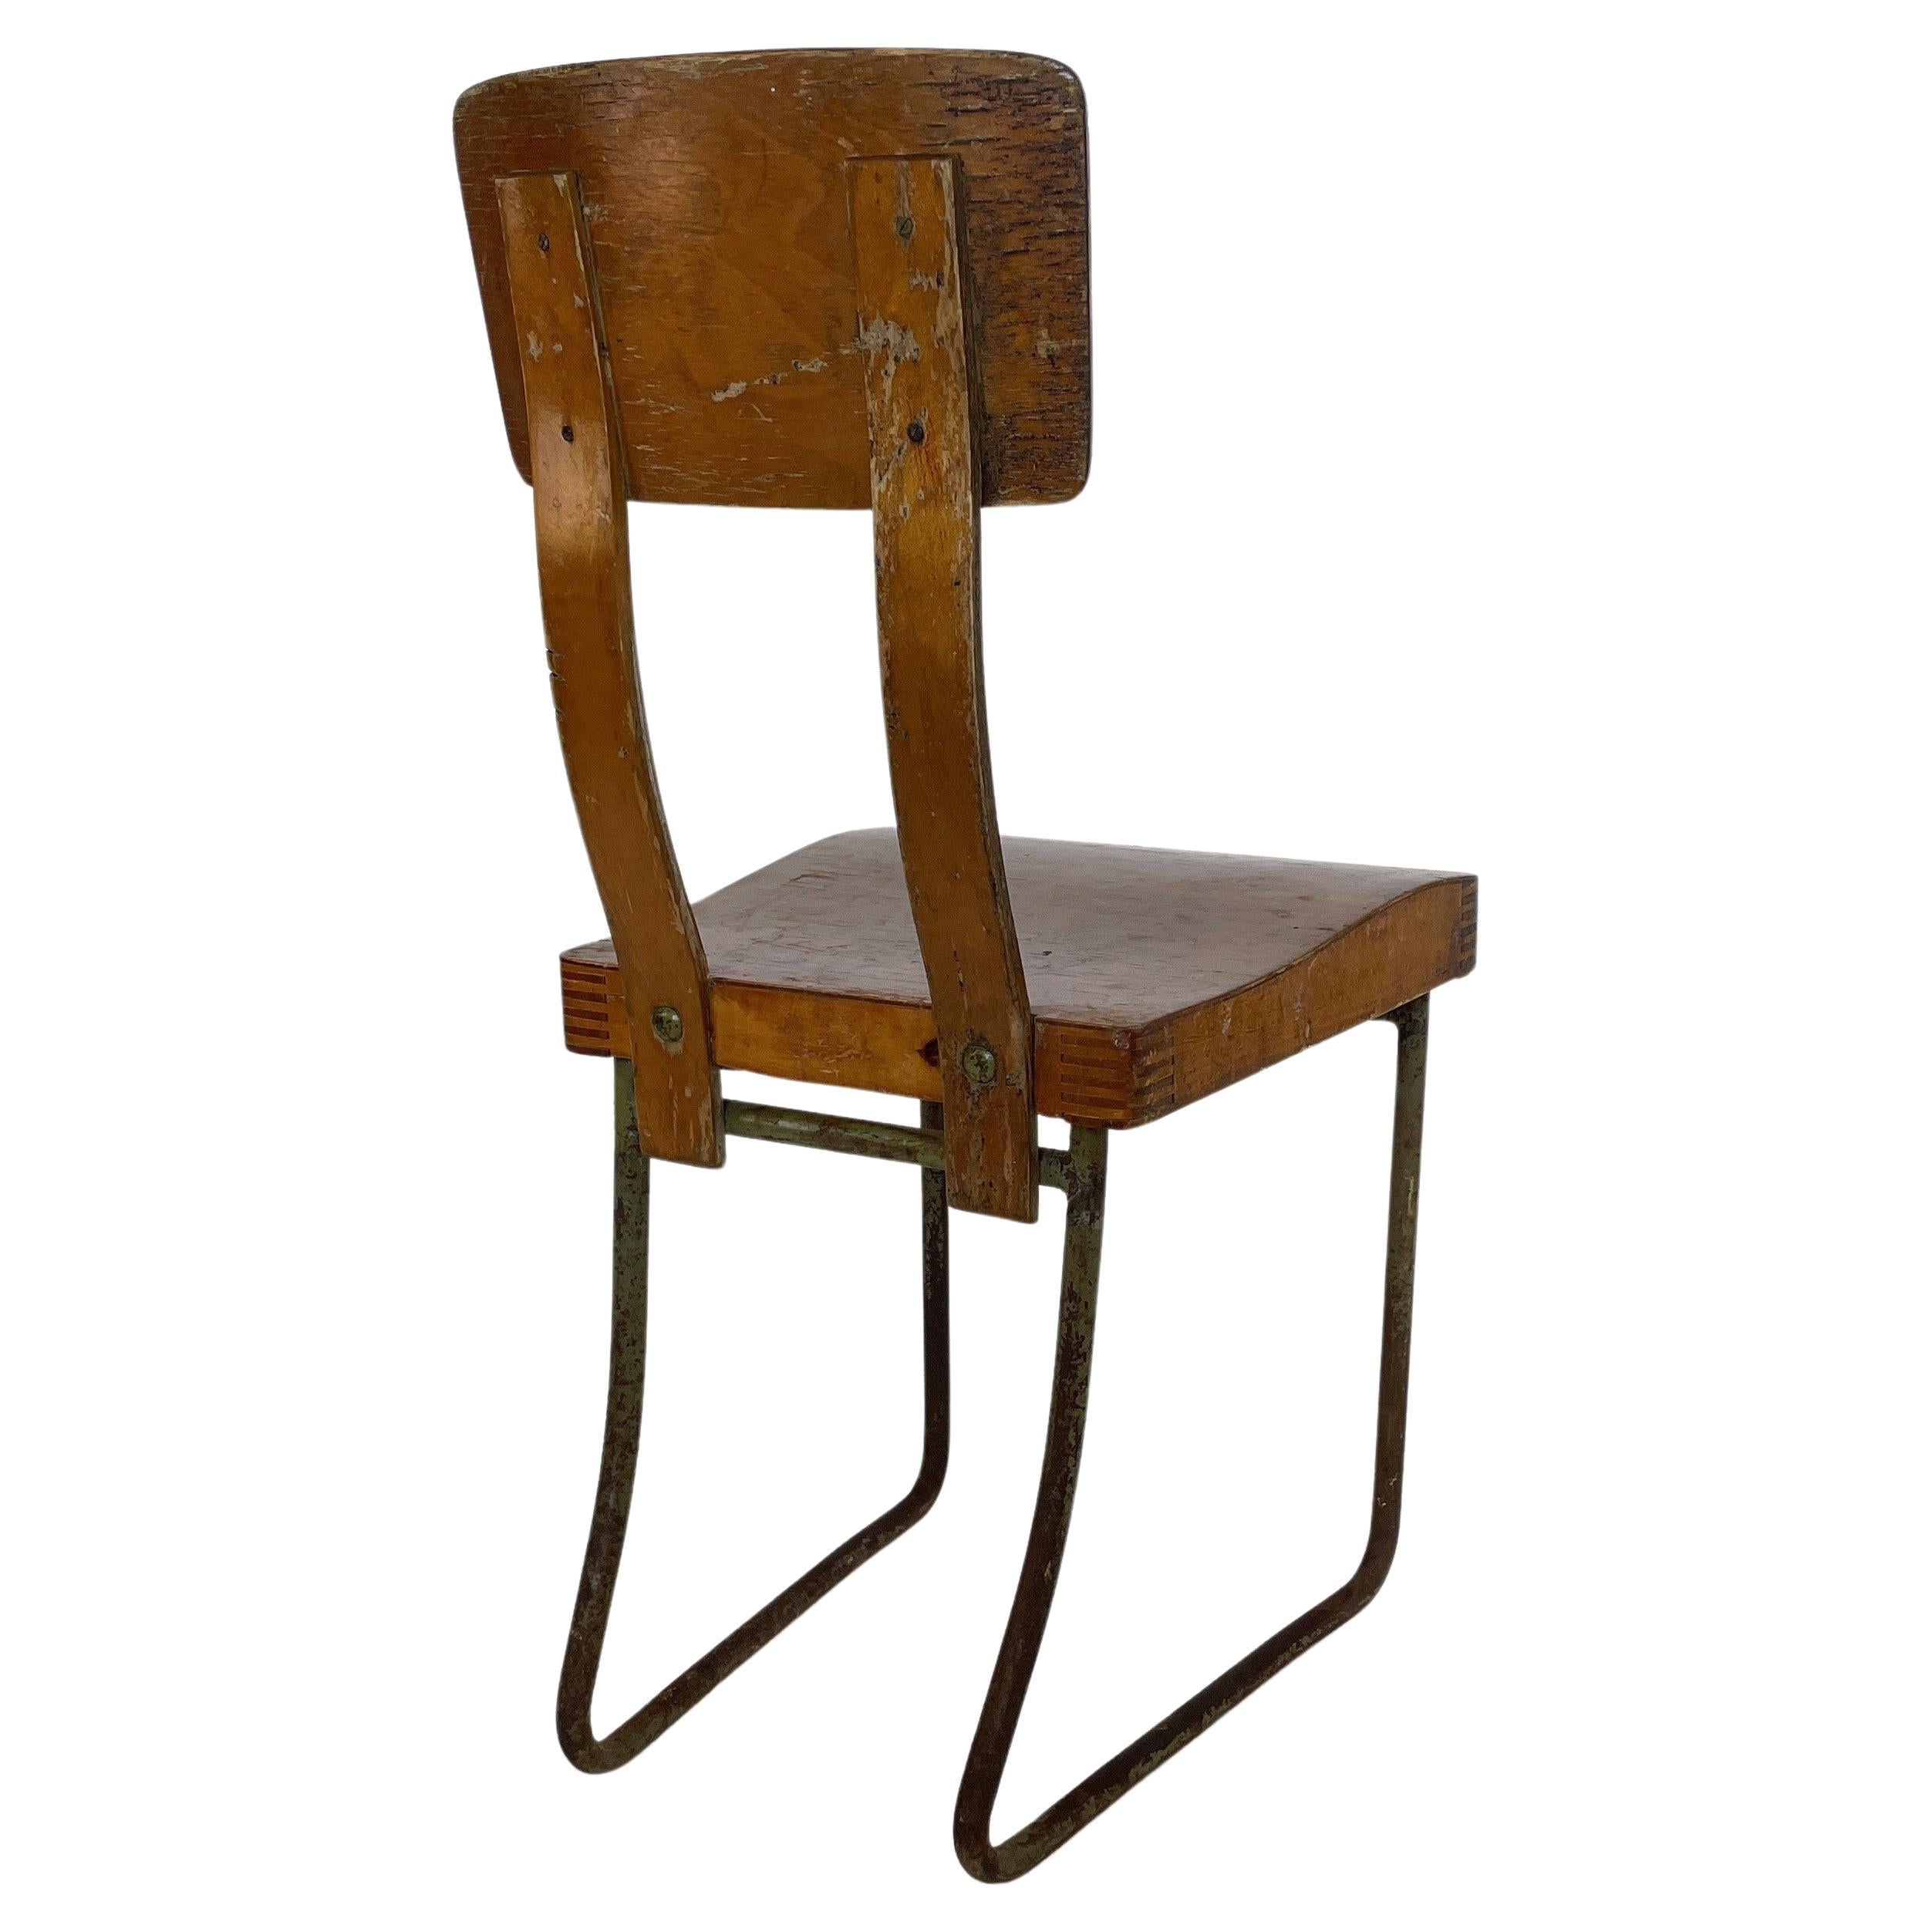 Bauhaus influenced Children’s Chair, Finland, 1920s